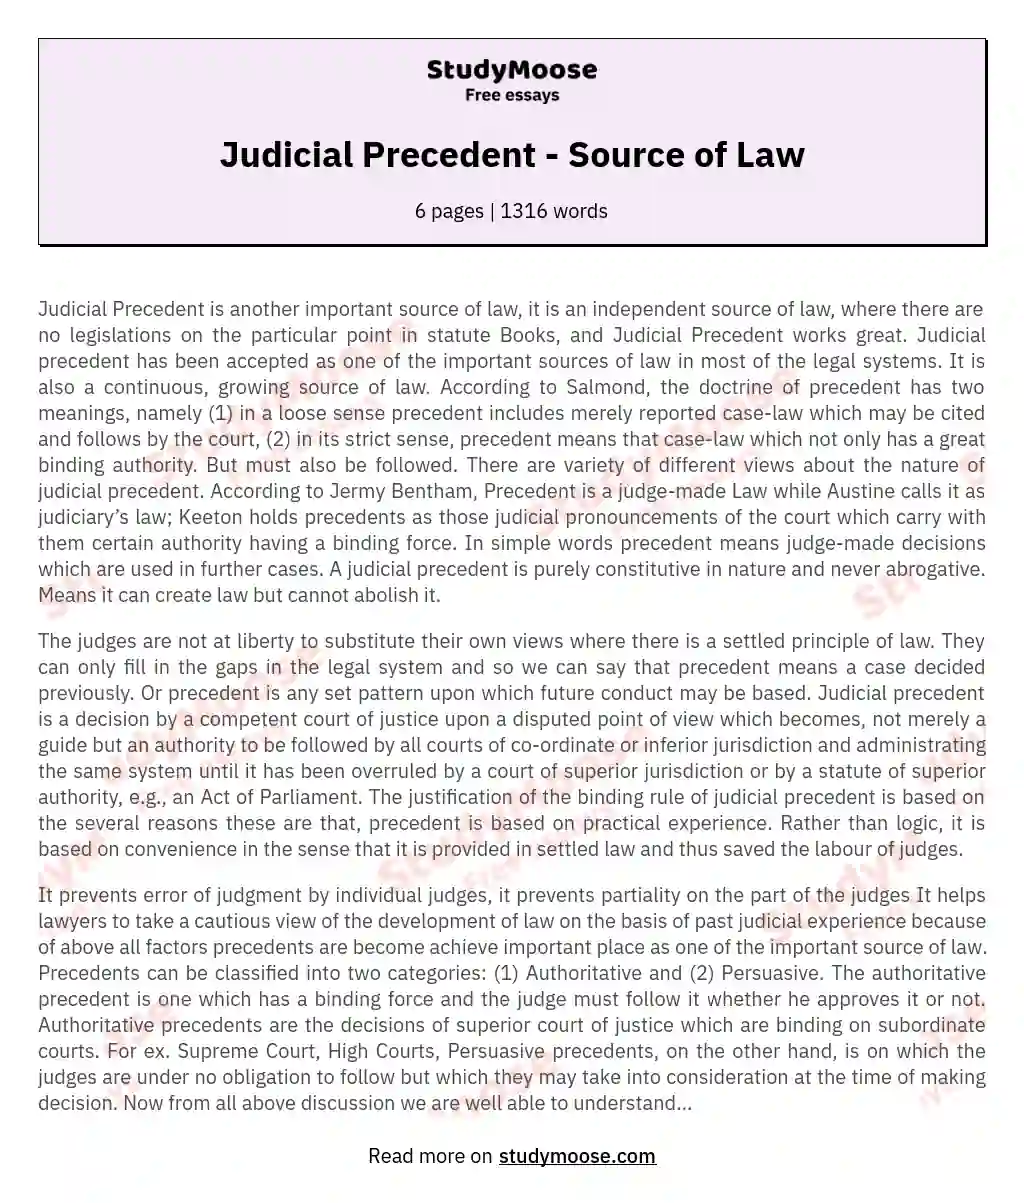 Judicial Precedent - Source of Law